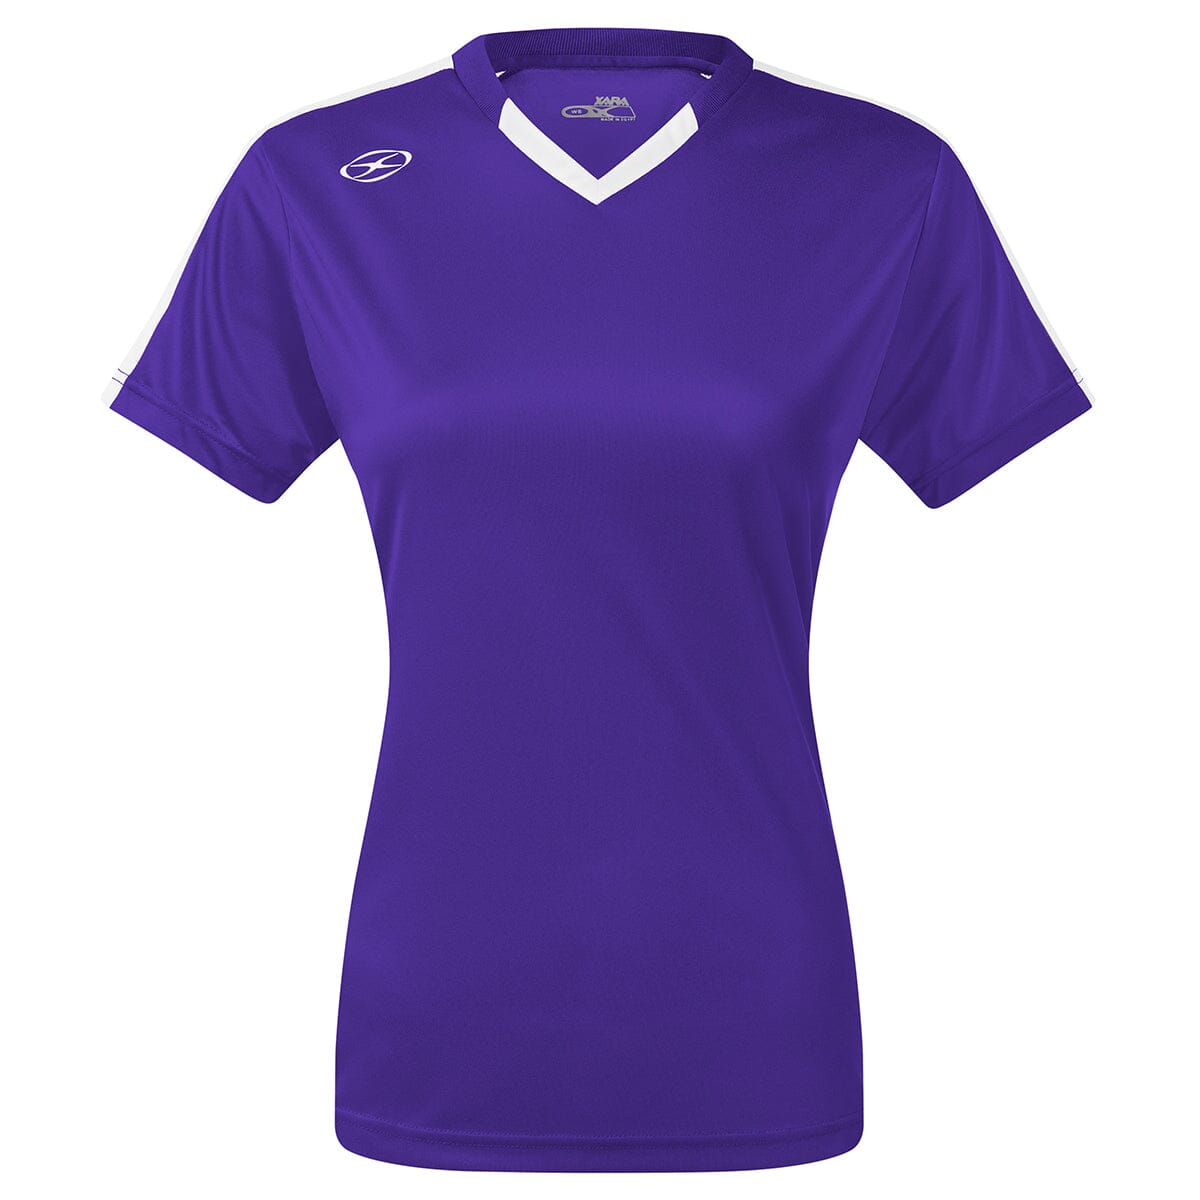 Britannia Jersey - Home Colors - Female Shirt Xara Soccer Purple/White Womens Youth Medium 